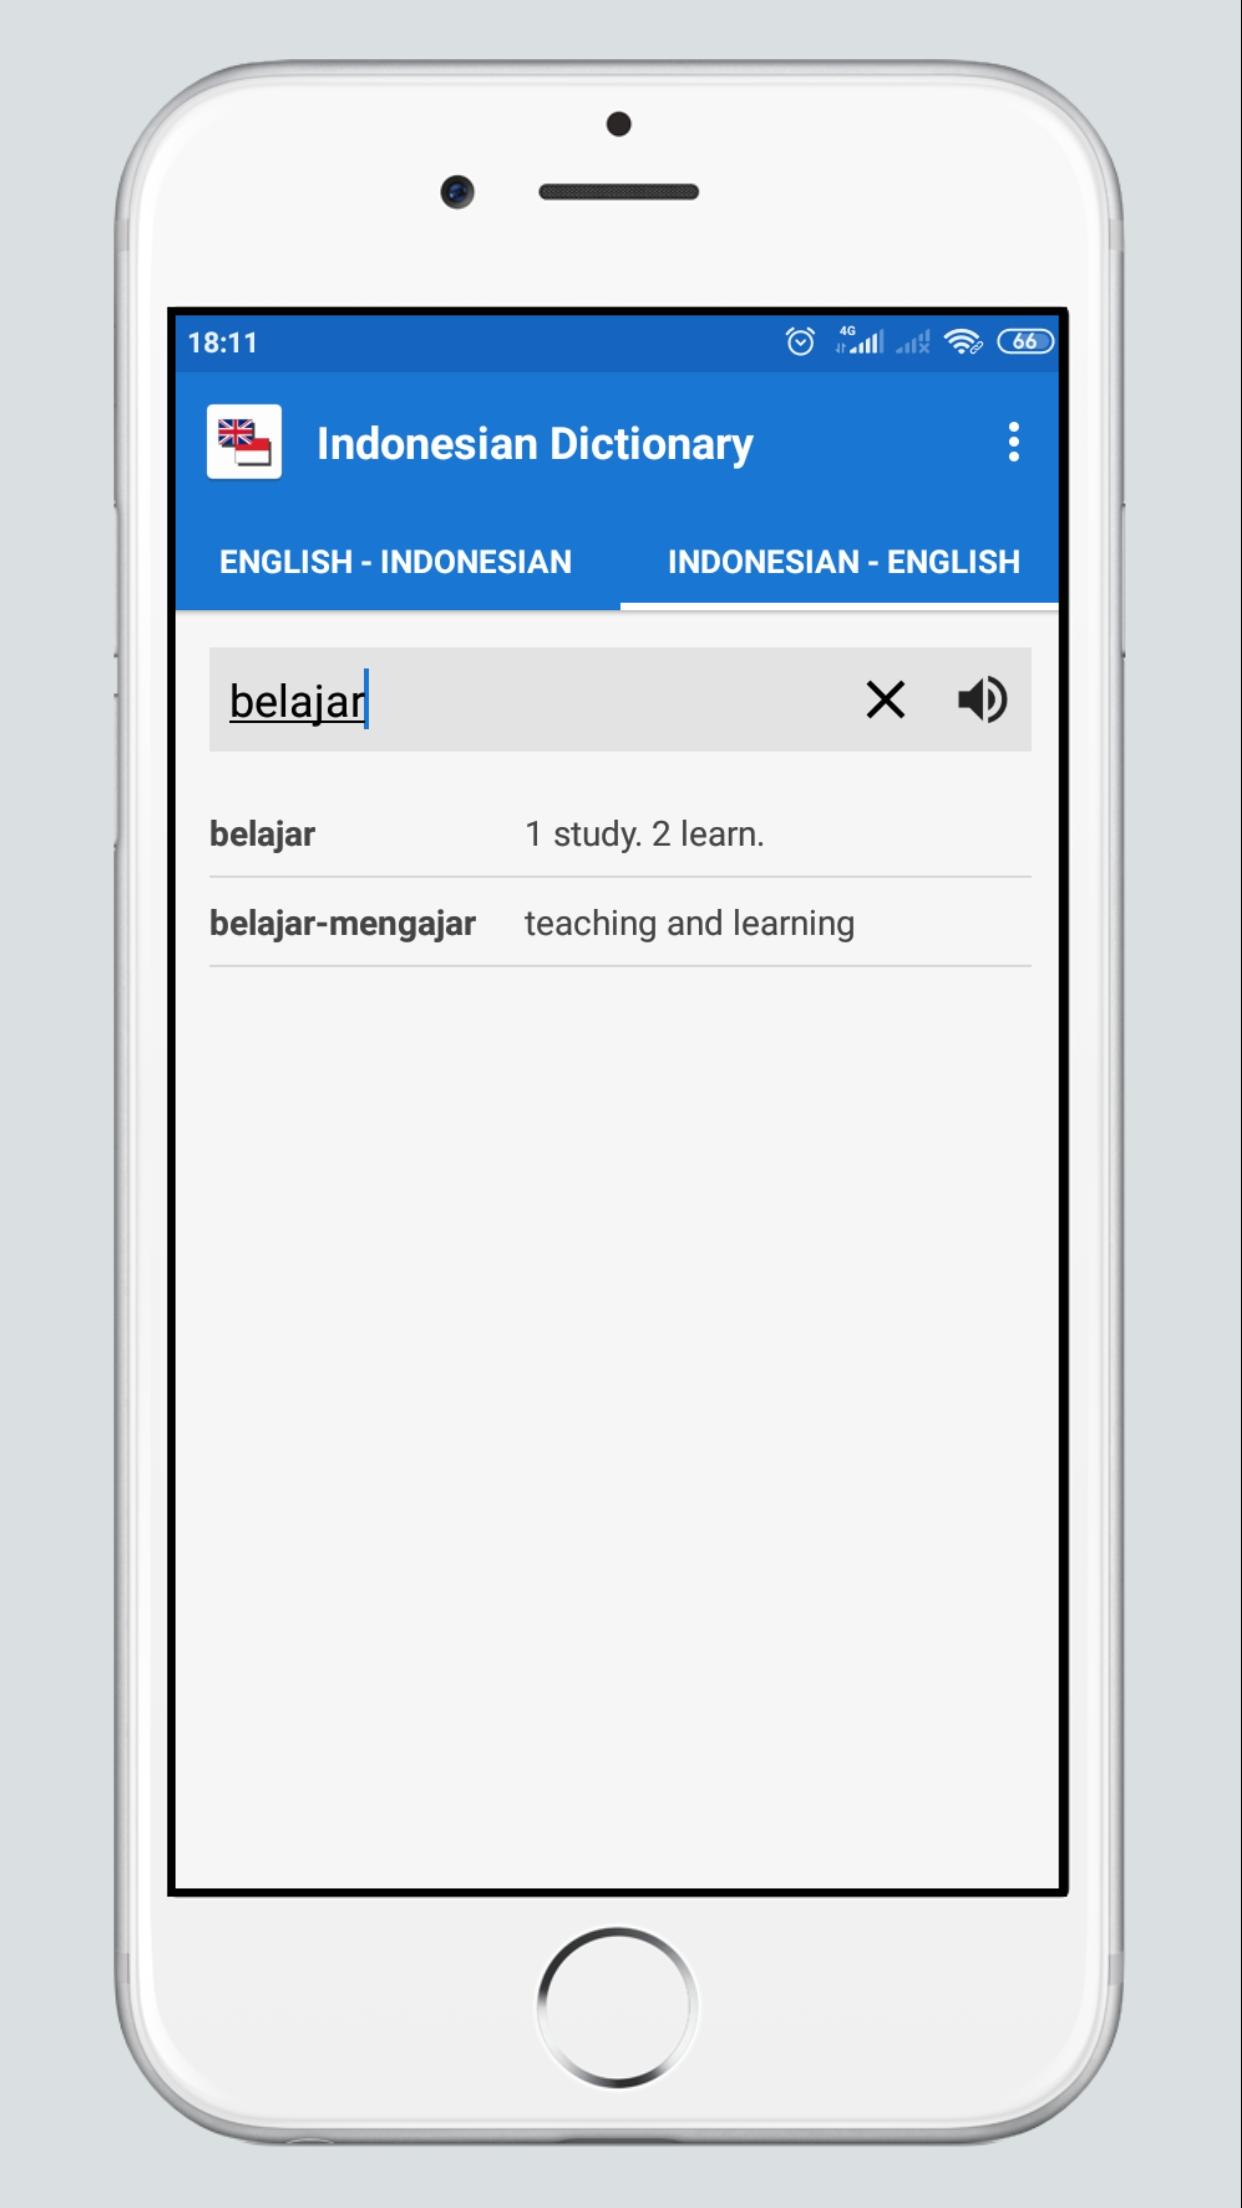 English - Indonesian Dictionary 1.0.2 Screenshot 5